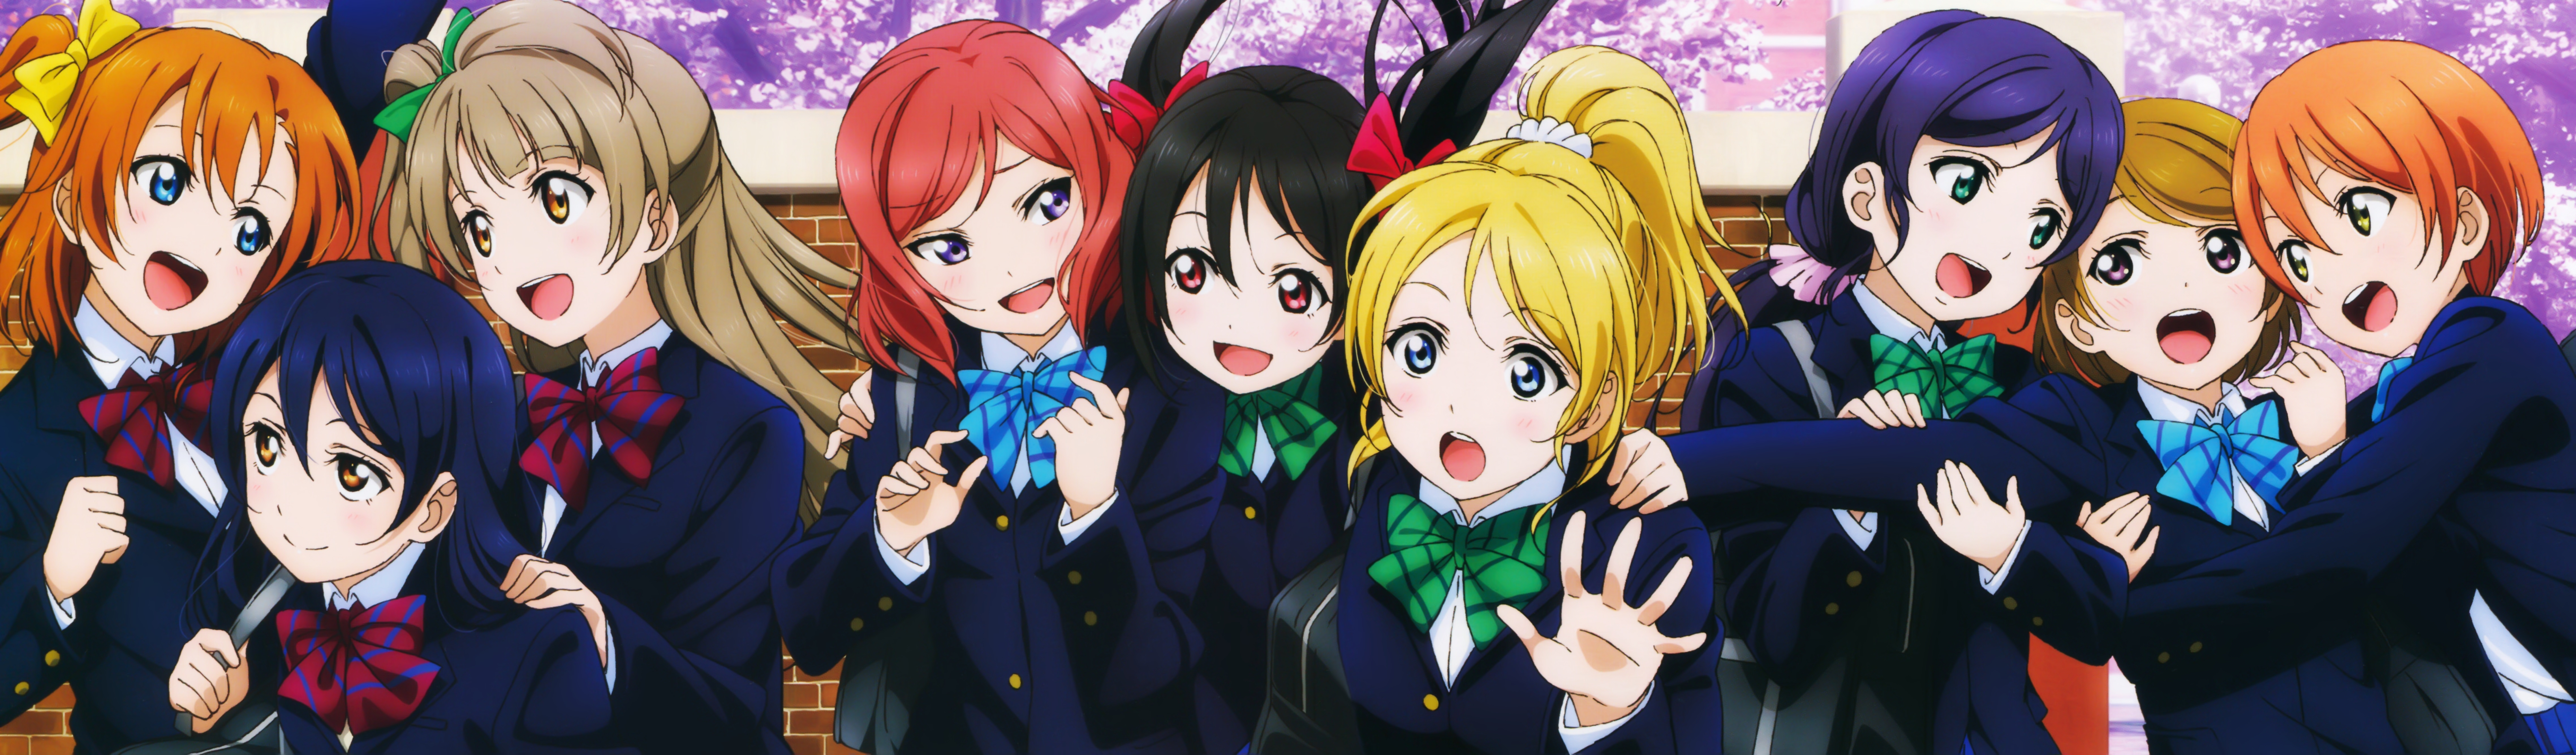 Love Live! School Idol Project Season 1 Review • Anime UK News